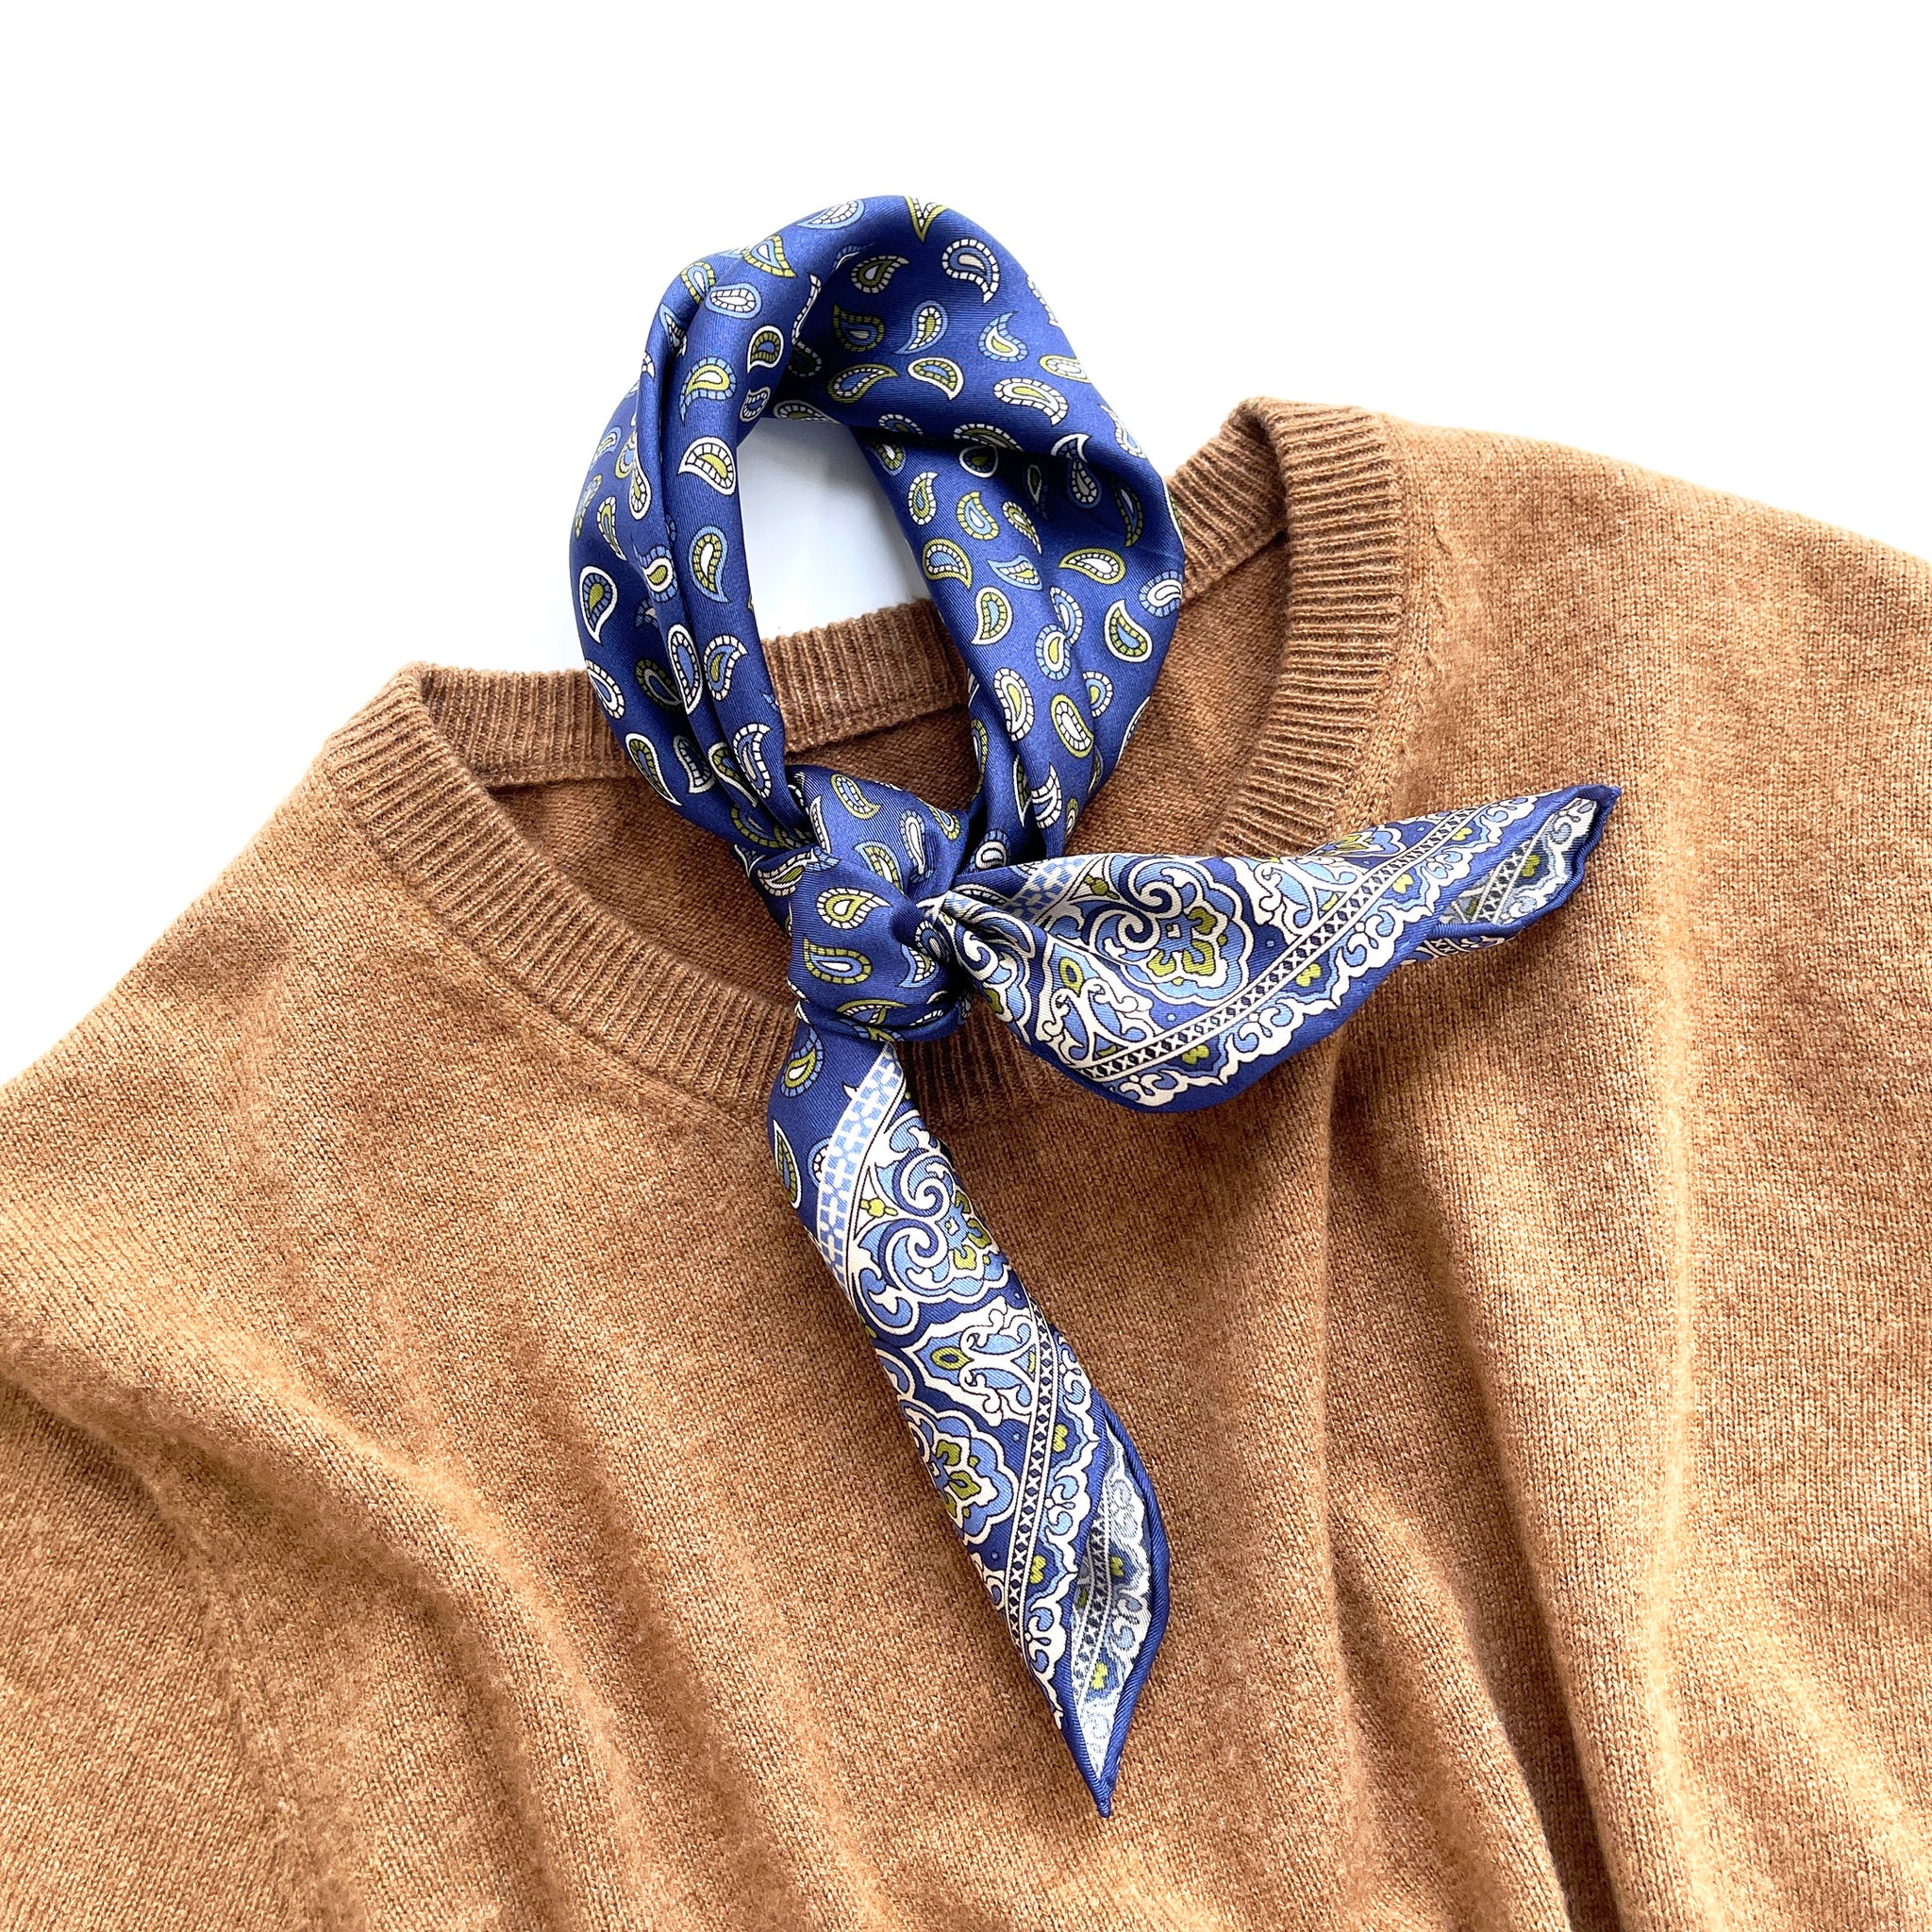 a rich blue paisley pattern silk neckerchief/bandana scarf